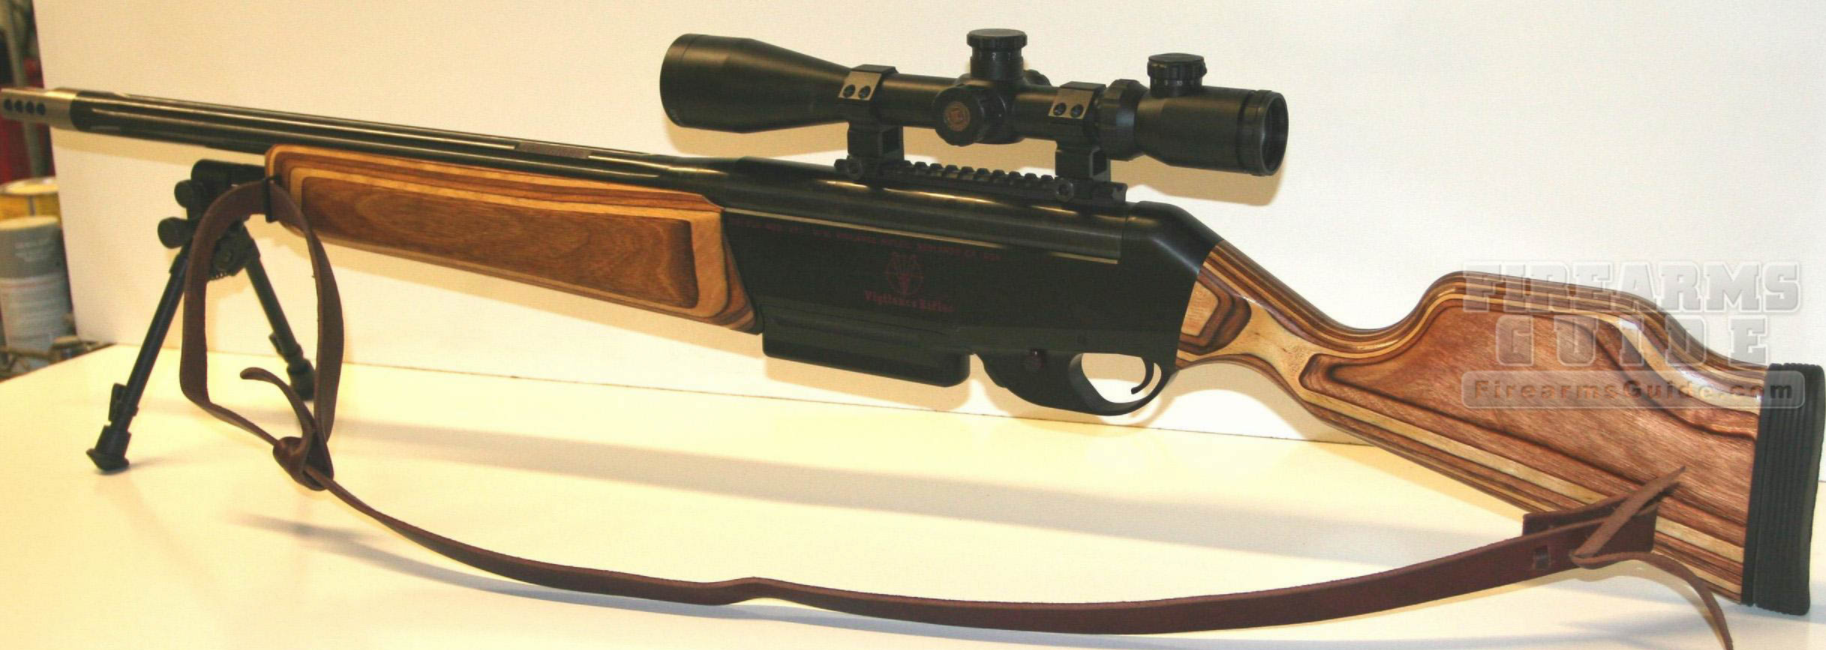 Vigilance Rifles VR1 Laminated